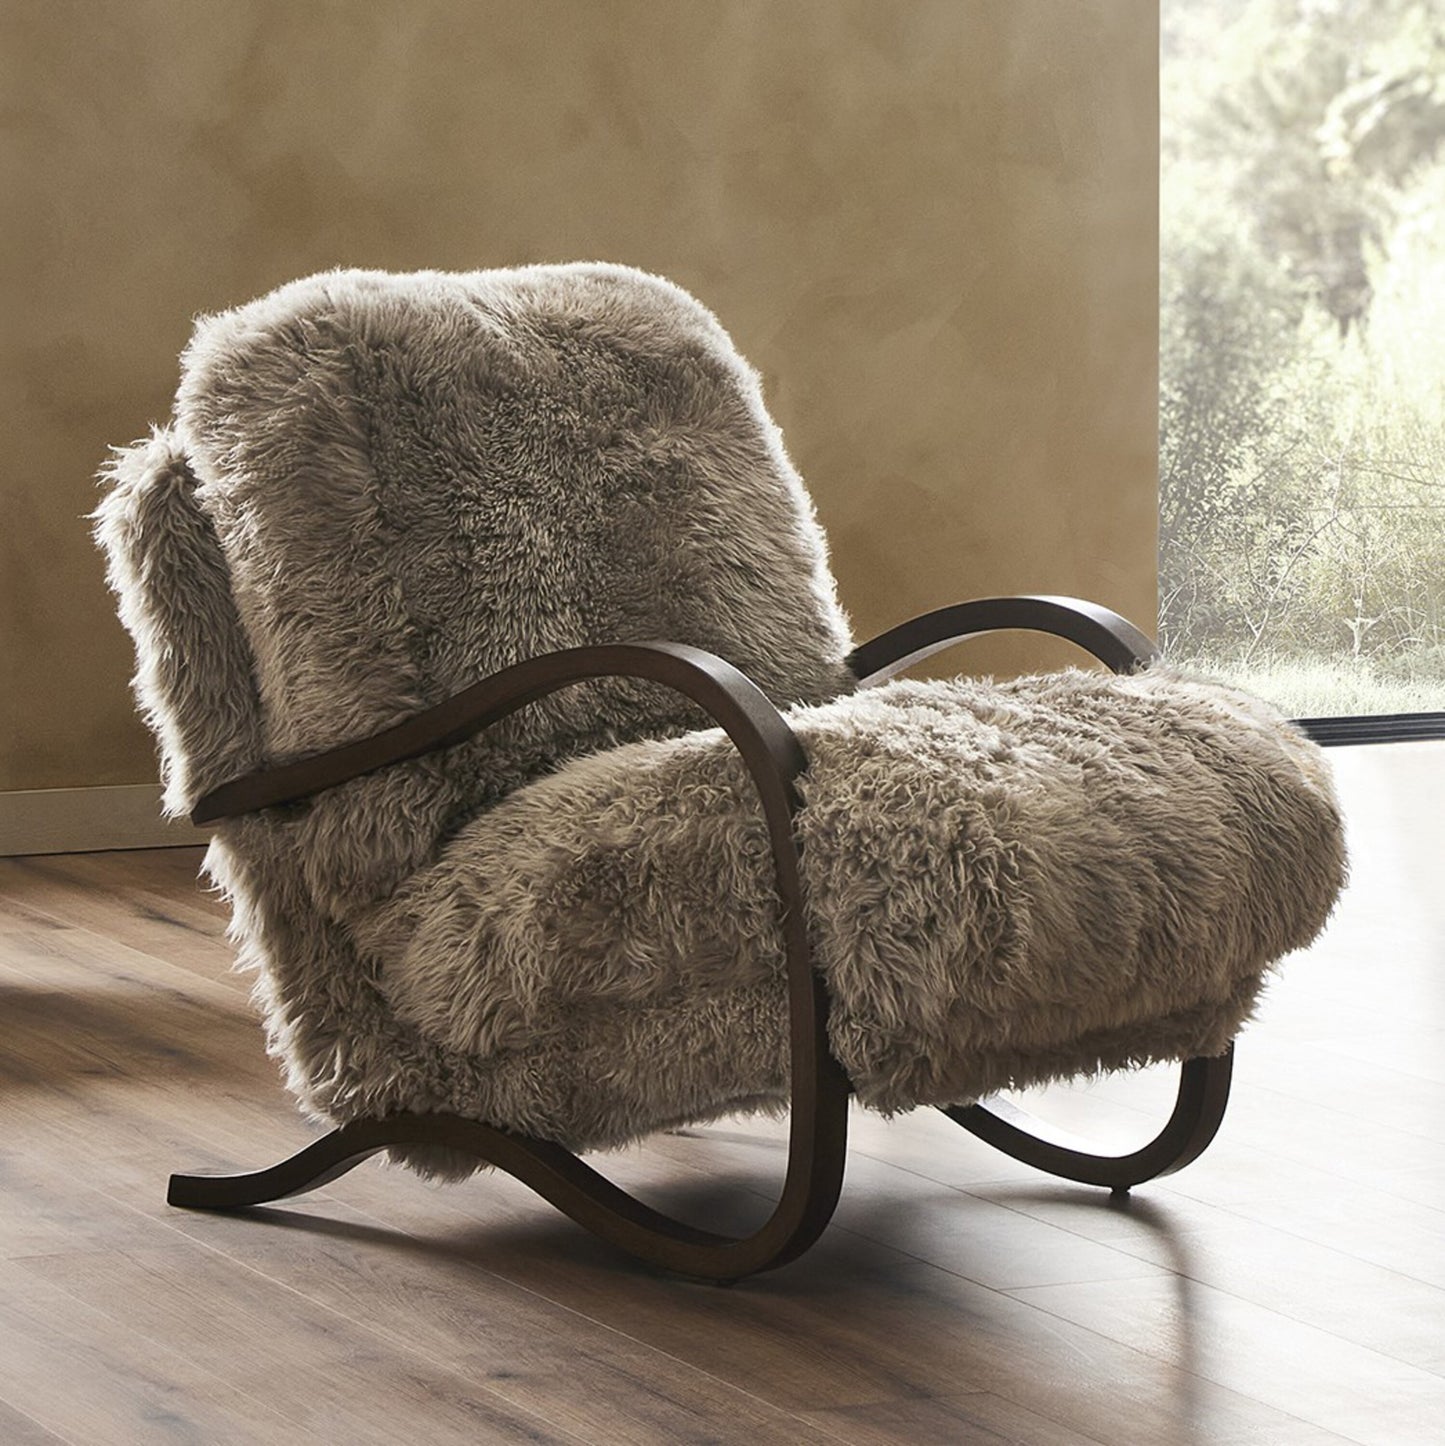 Tobin chair-taupe mongolian fur